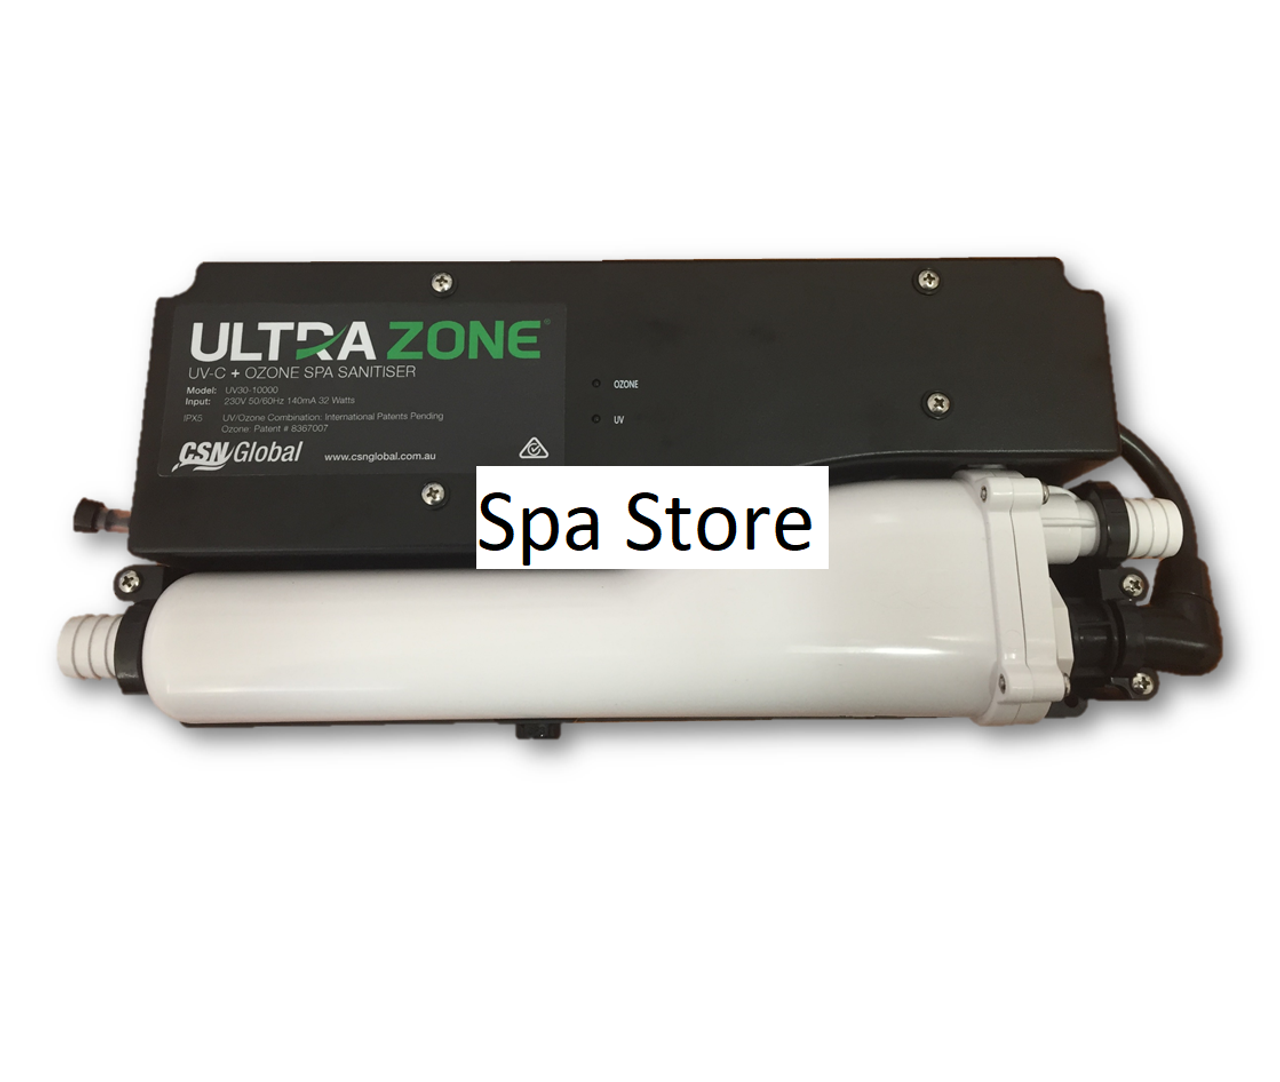 UltraZone UV-C + Ozone Spa Sanitiser